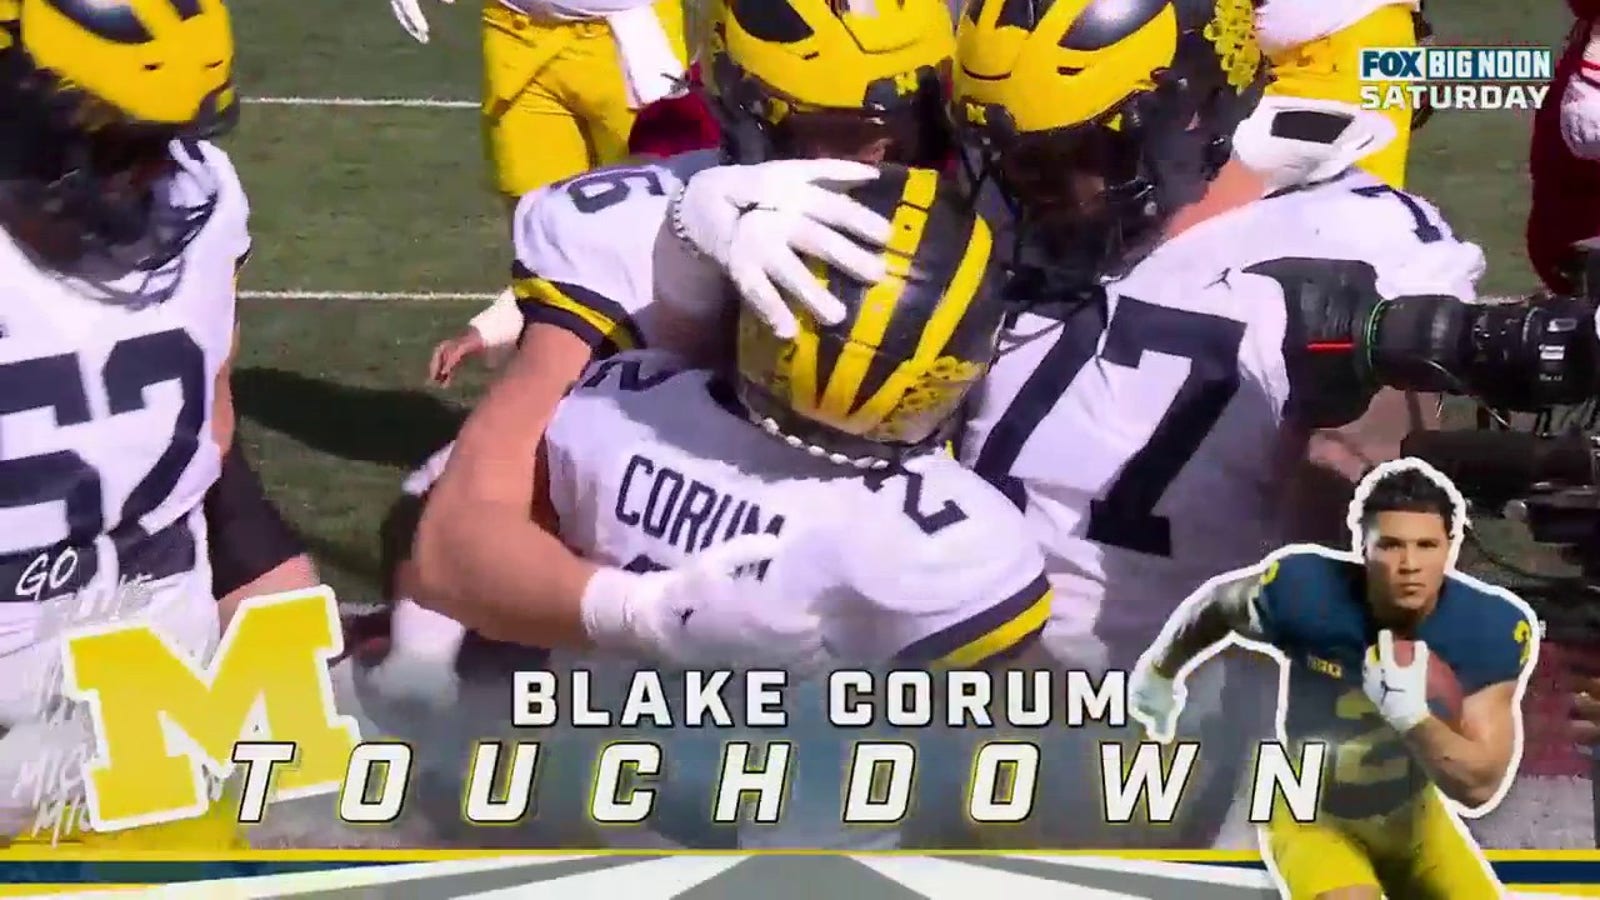 Blake Colm runs in for a 1-yard touchdown